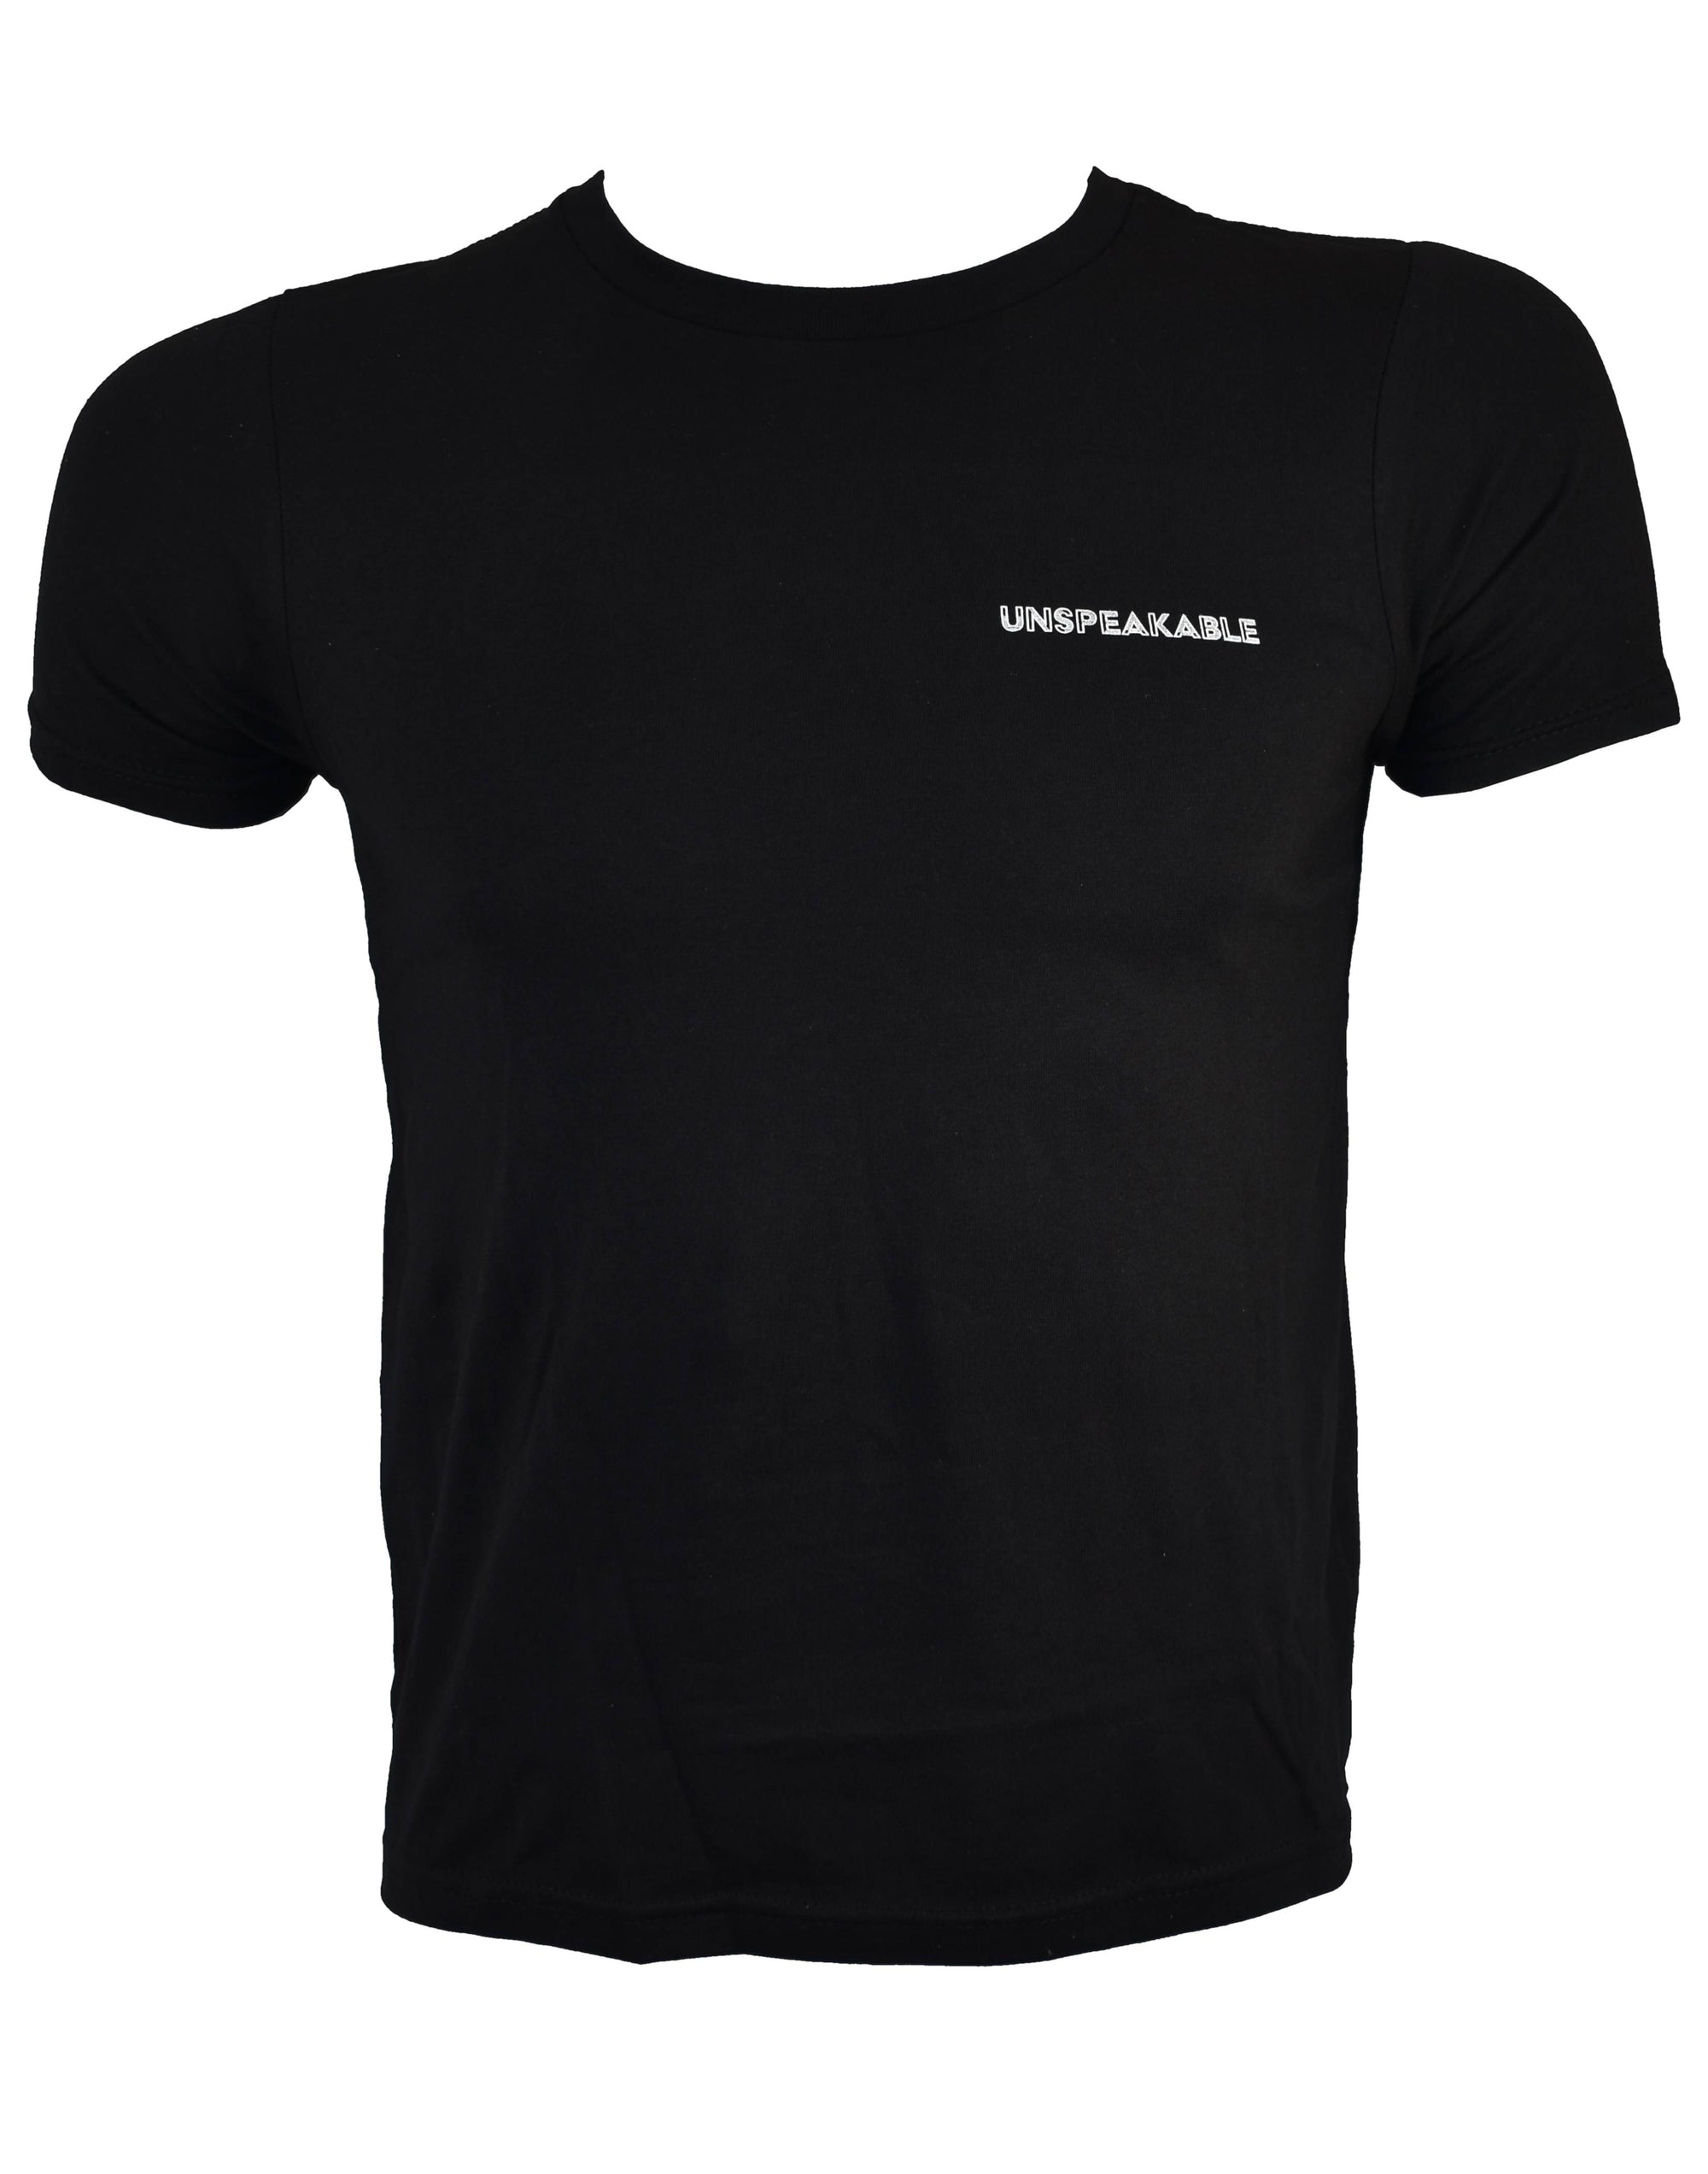 Unspeakable Shirt | Black Floral T-shirt